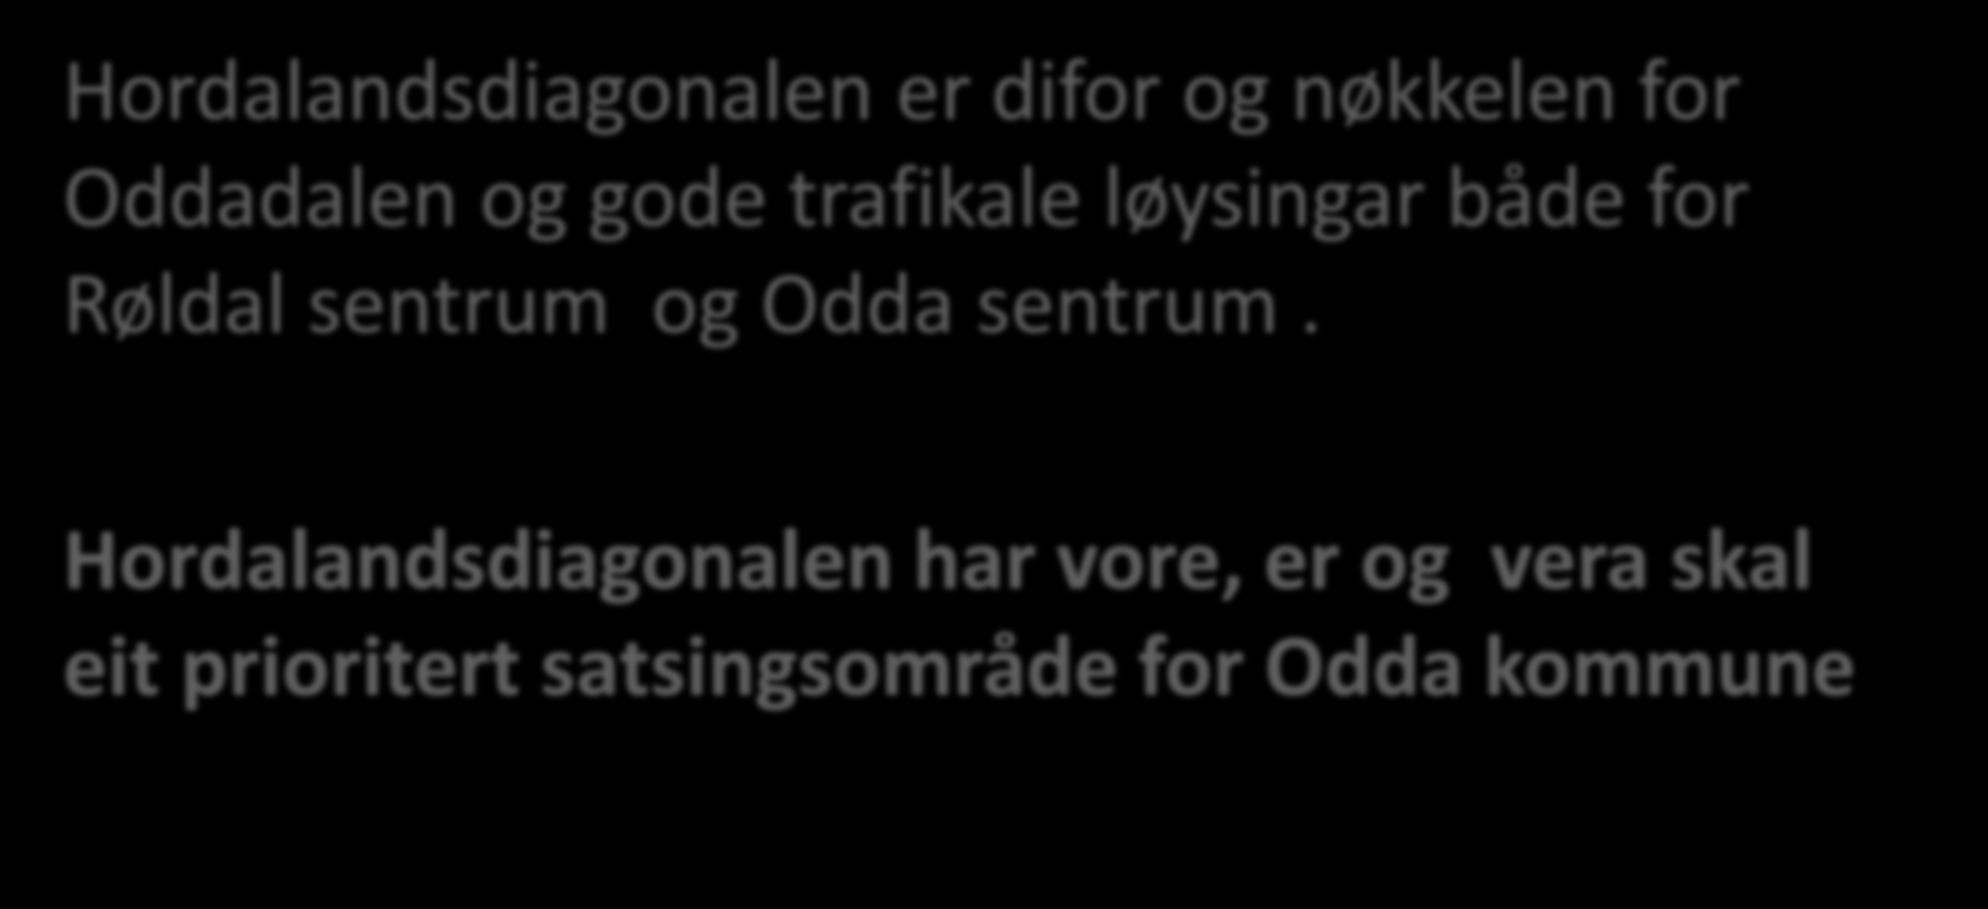 Hordalandsdiagonalen er difor og nøkkelen for Oddadalen og gode trafikale løysingar både for Røldal